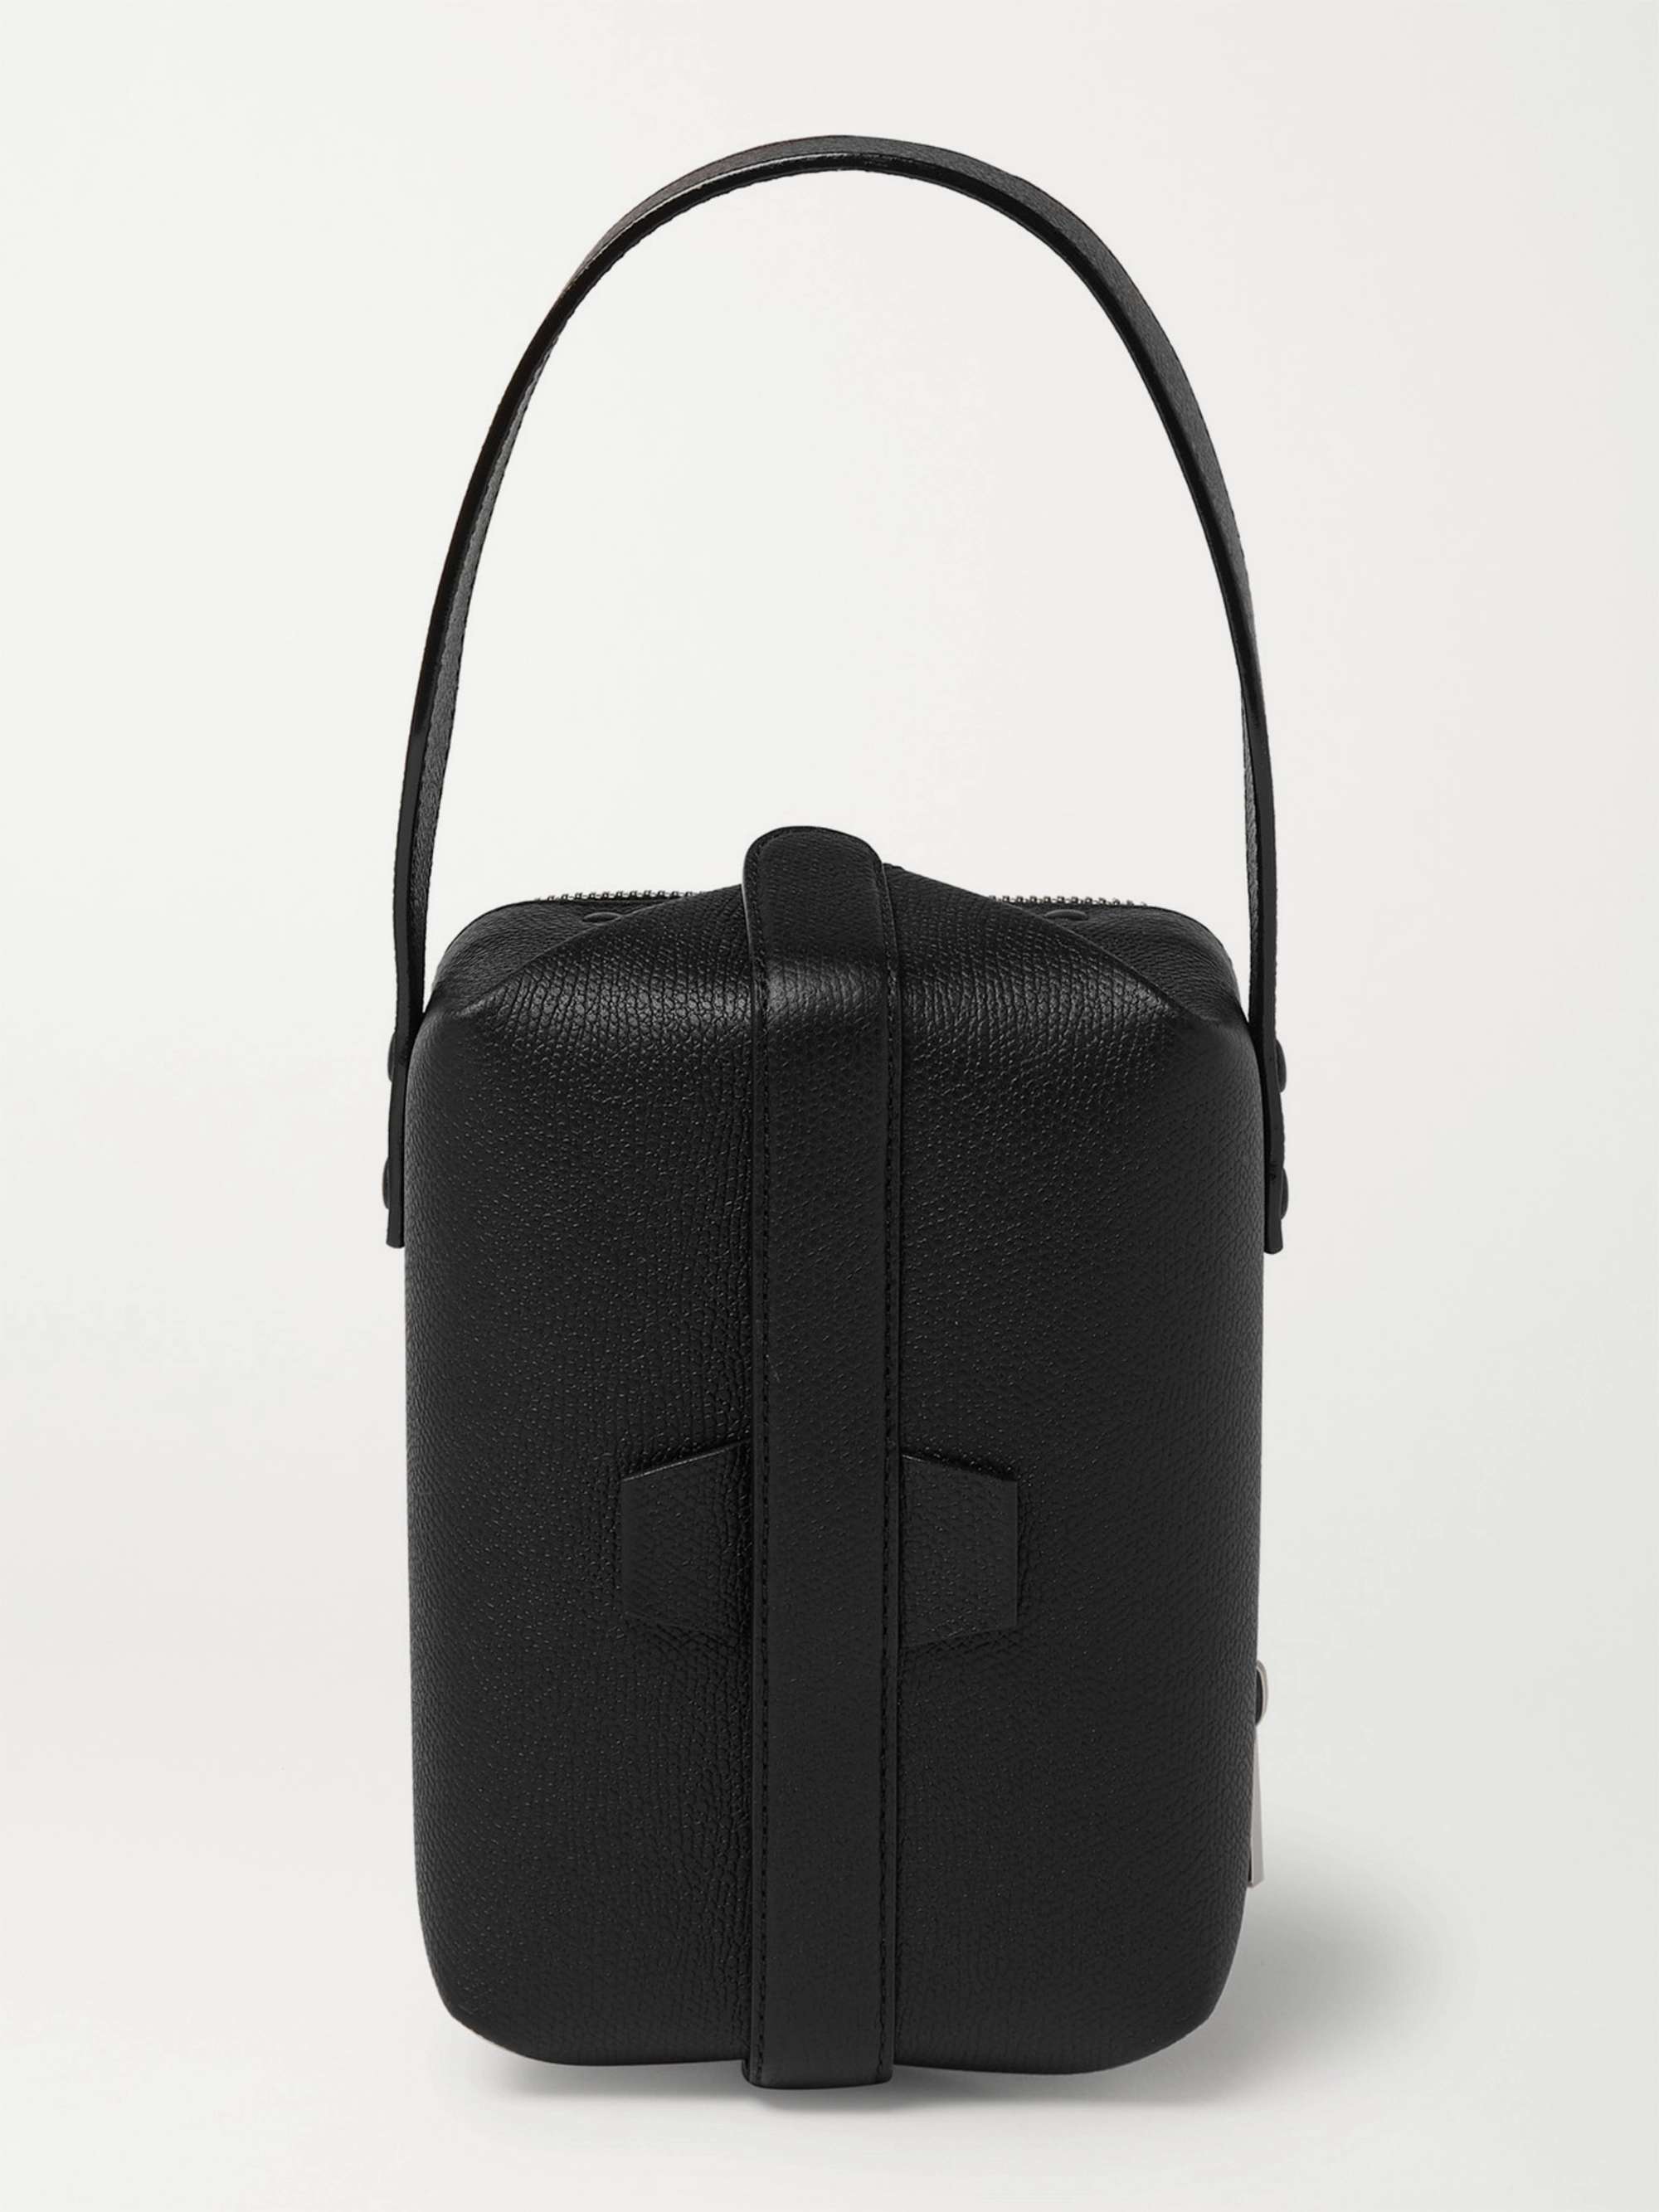 VALEXTRA Pebble-Grain Leather Tote Bag